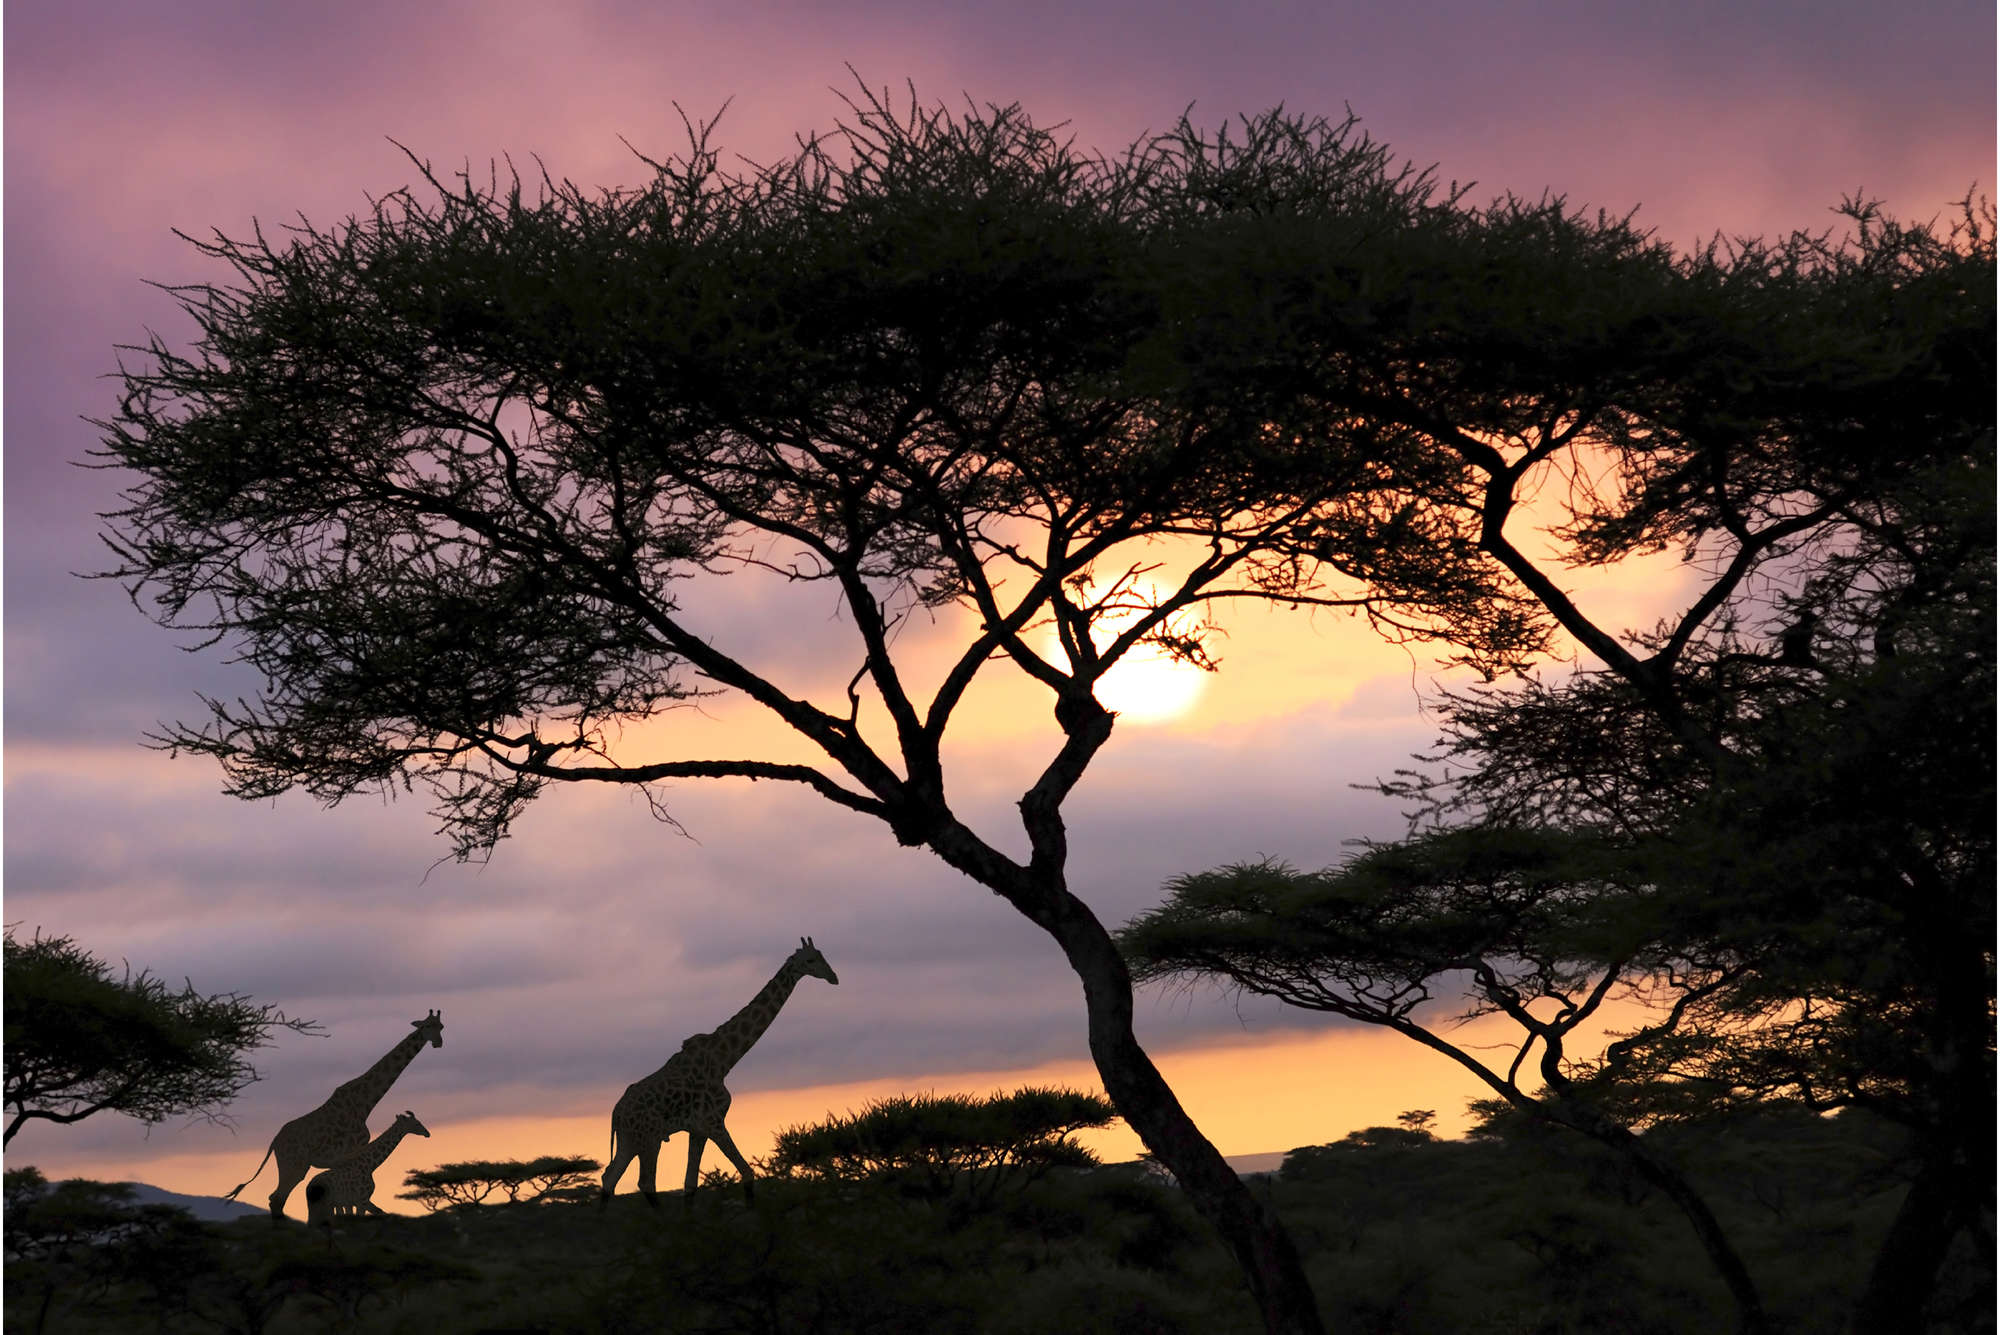             Fototapete Savanne mit Giraffen – Perlmutt Glattvlies
        